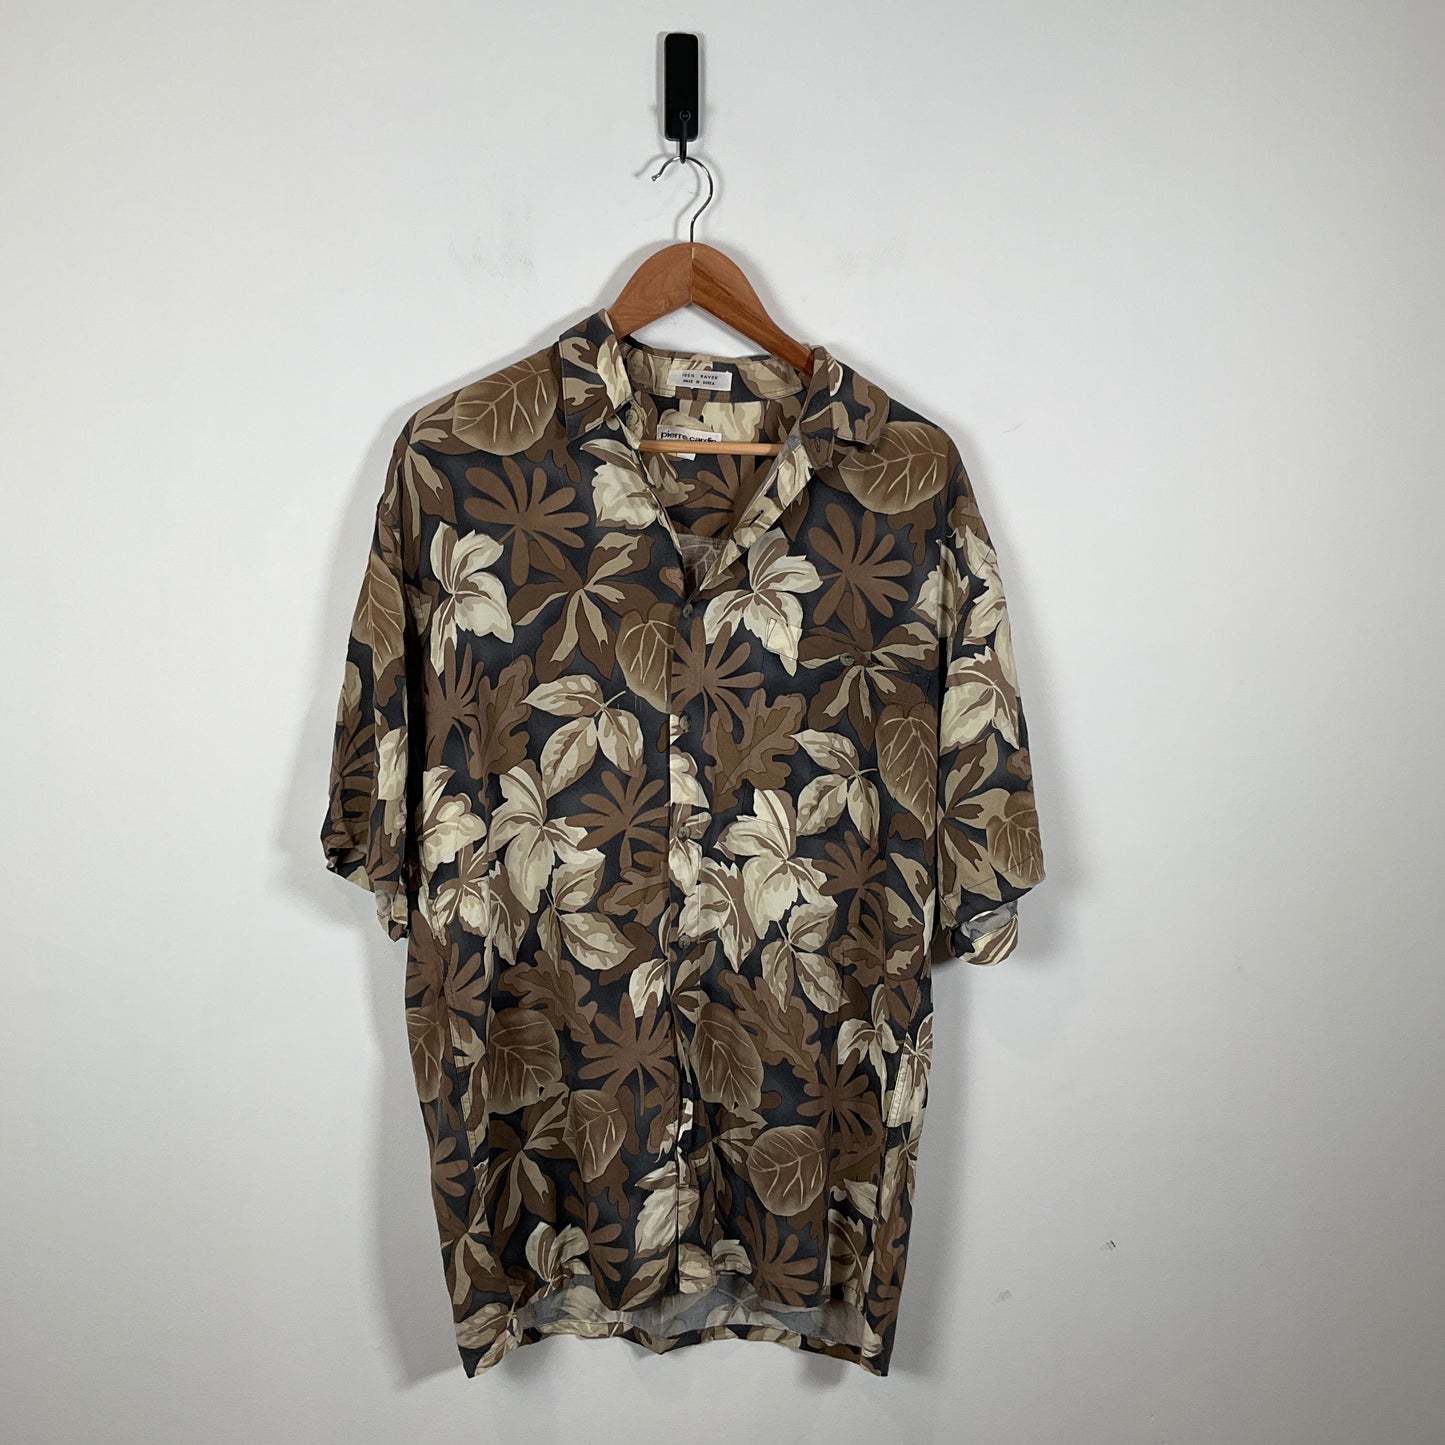 Pierre Cardin - Vintage Patterned Shirt Shirts & Tops